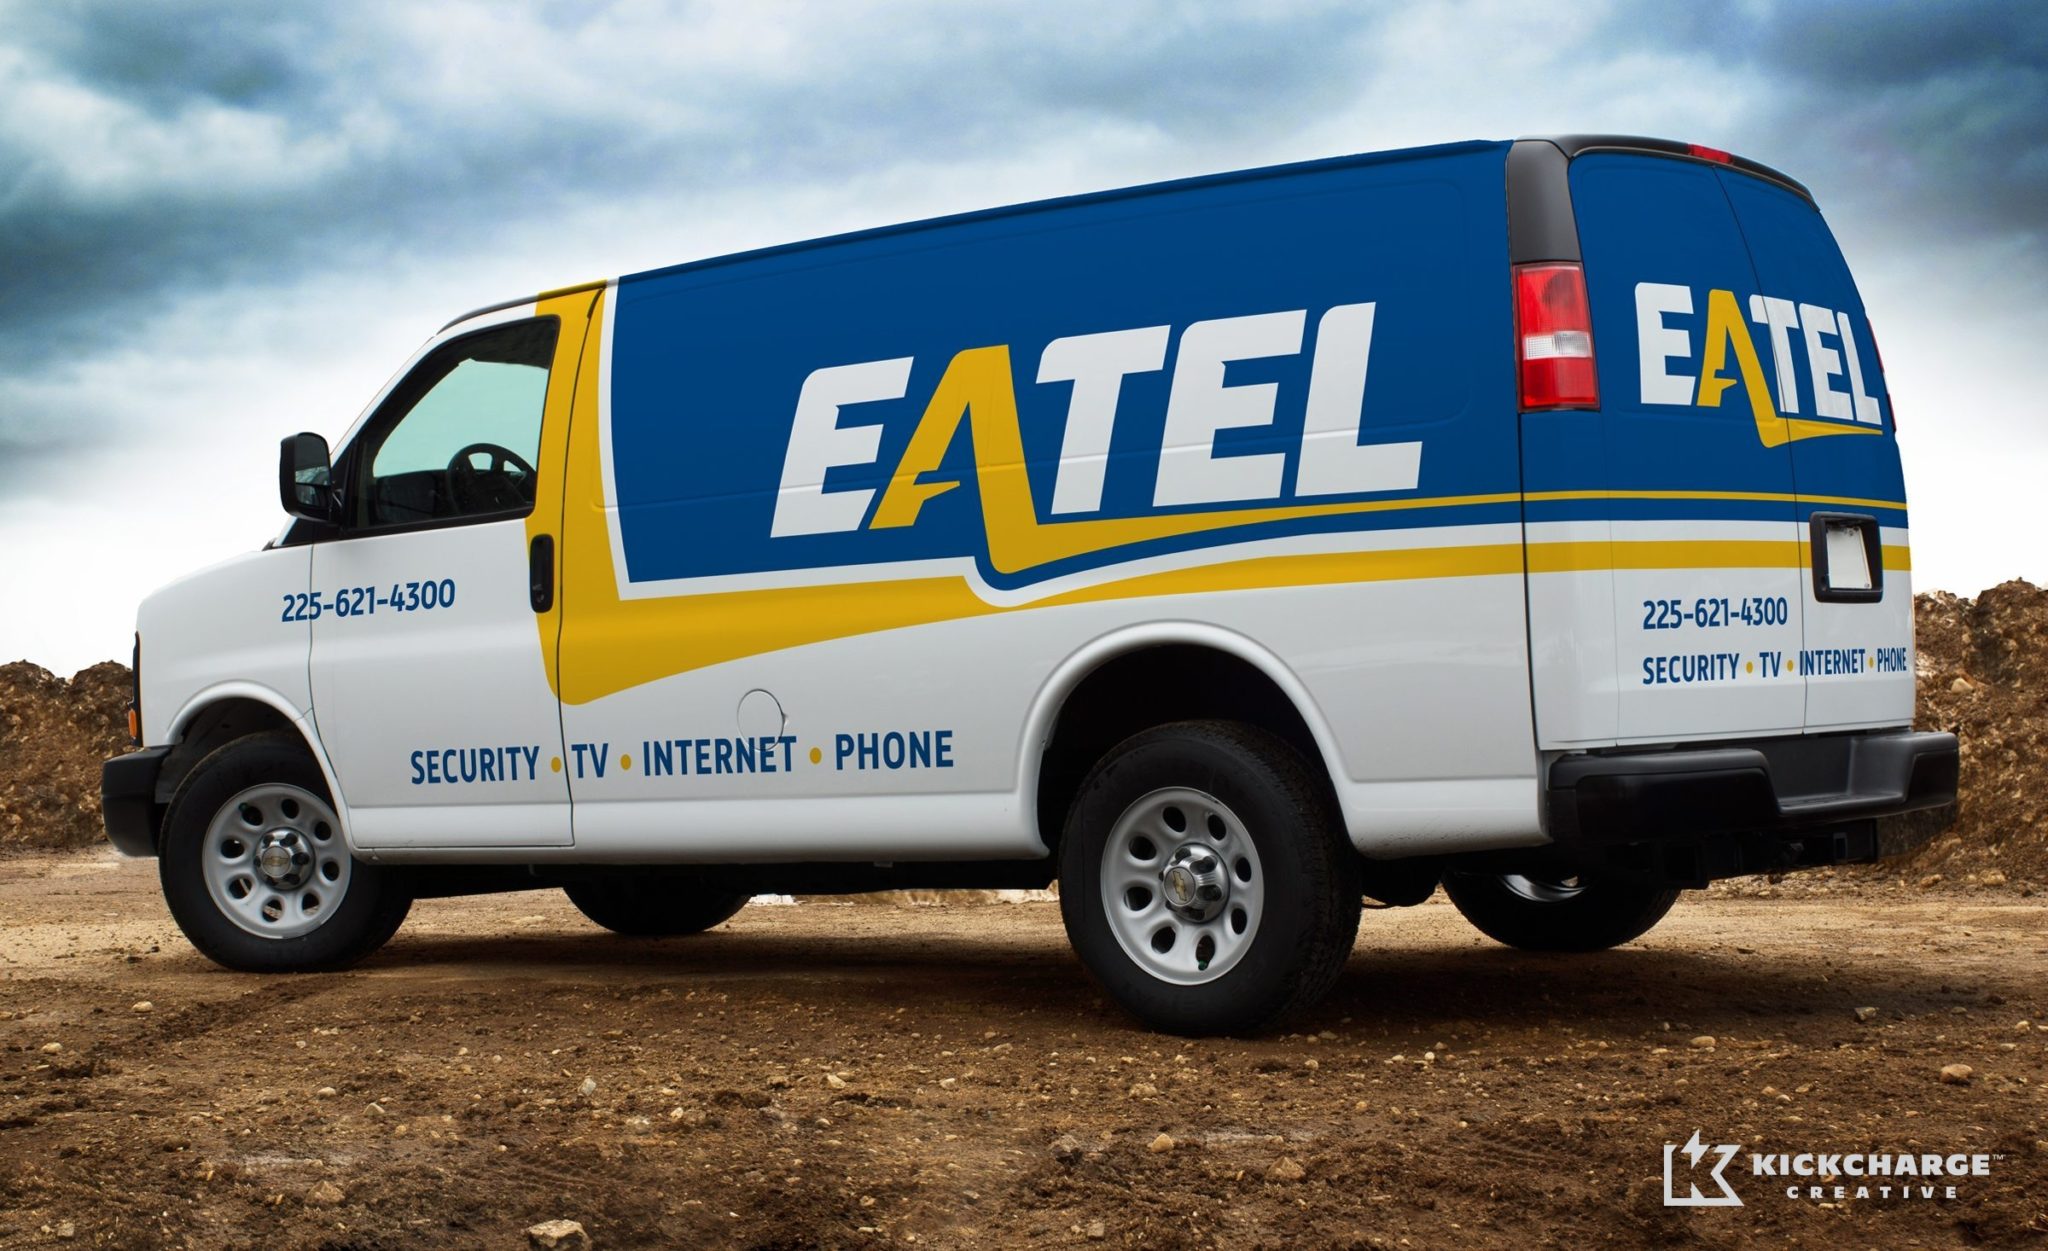 Fleet graphic design for Eatel, Louisiana's largest telecom and internet provider.